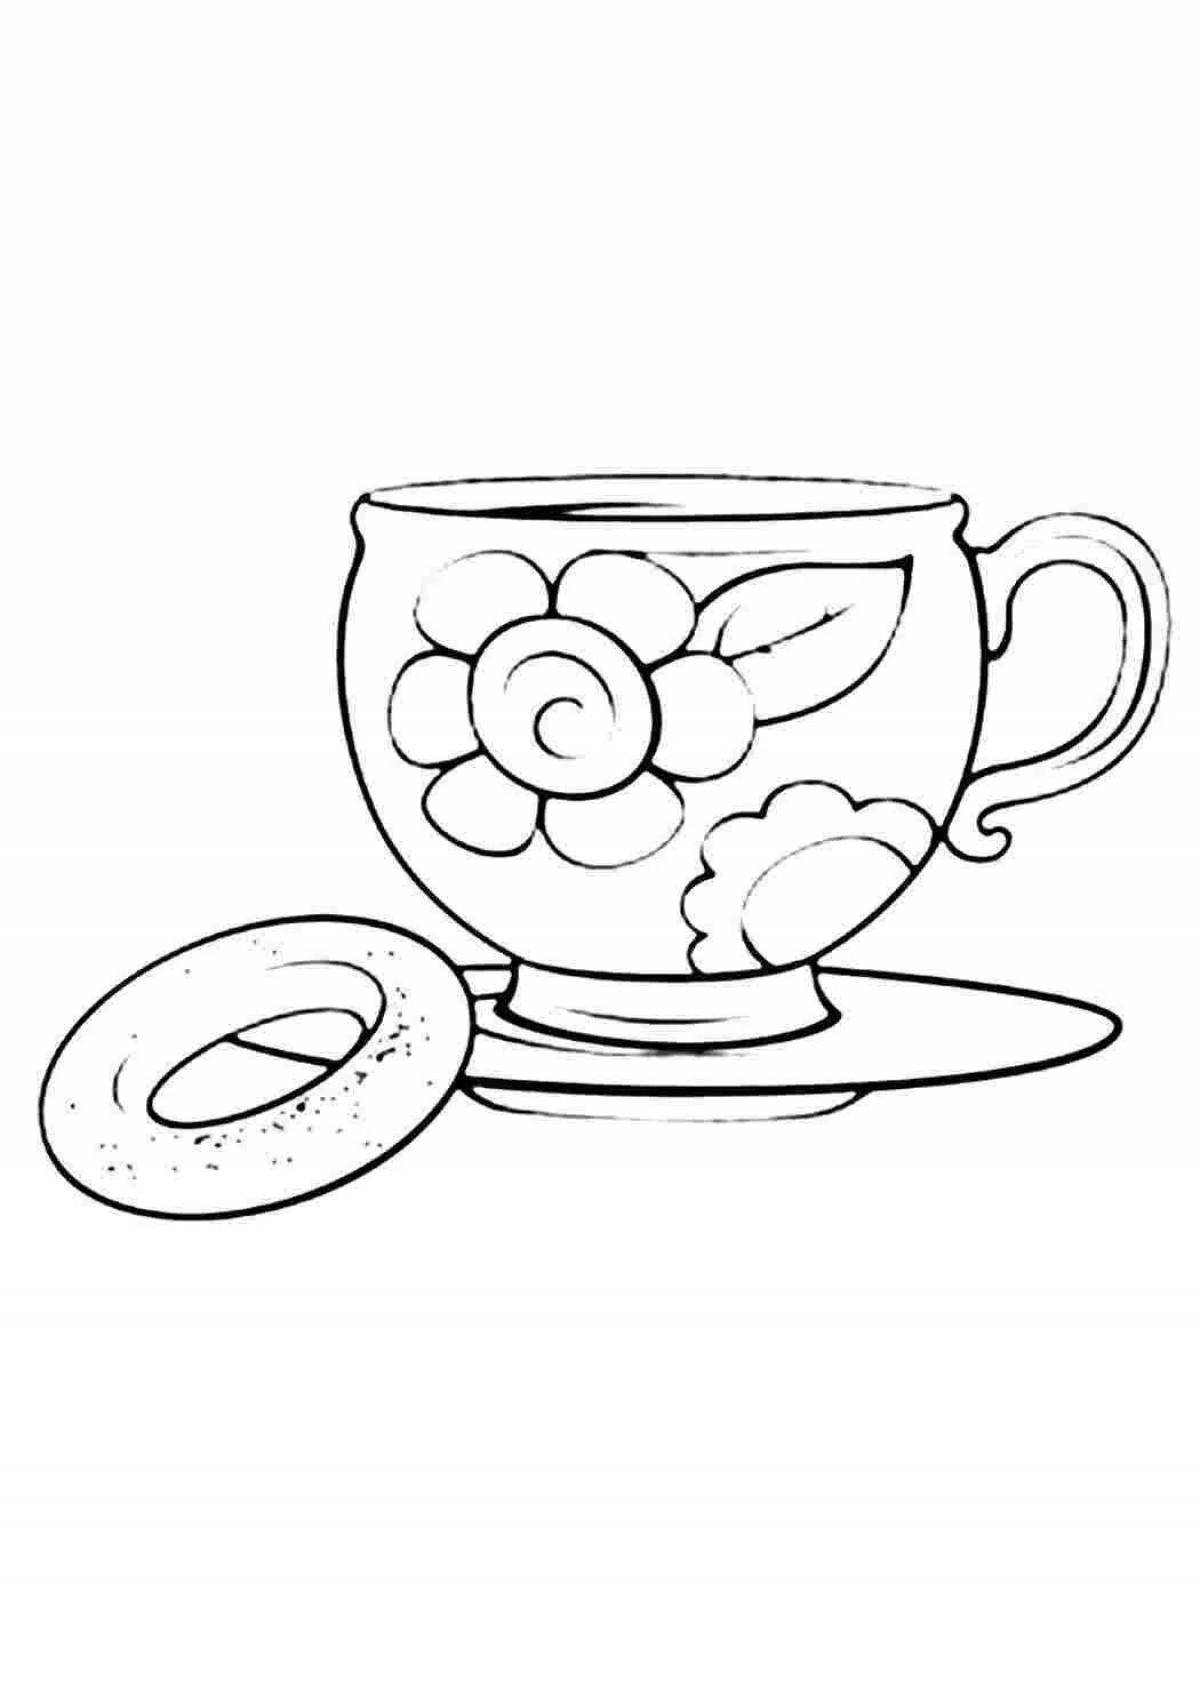 Cheerful tea utensils coloring book for kids